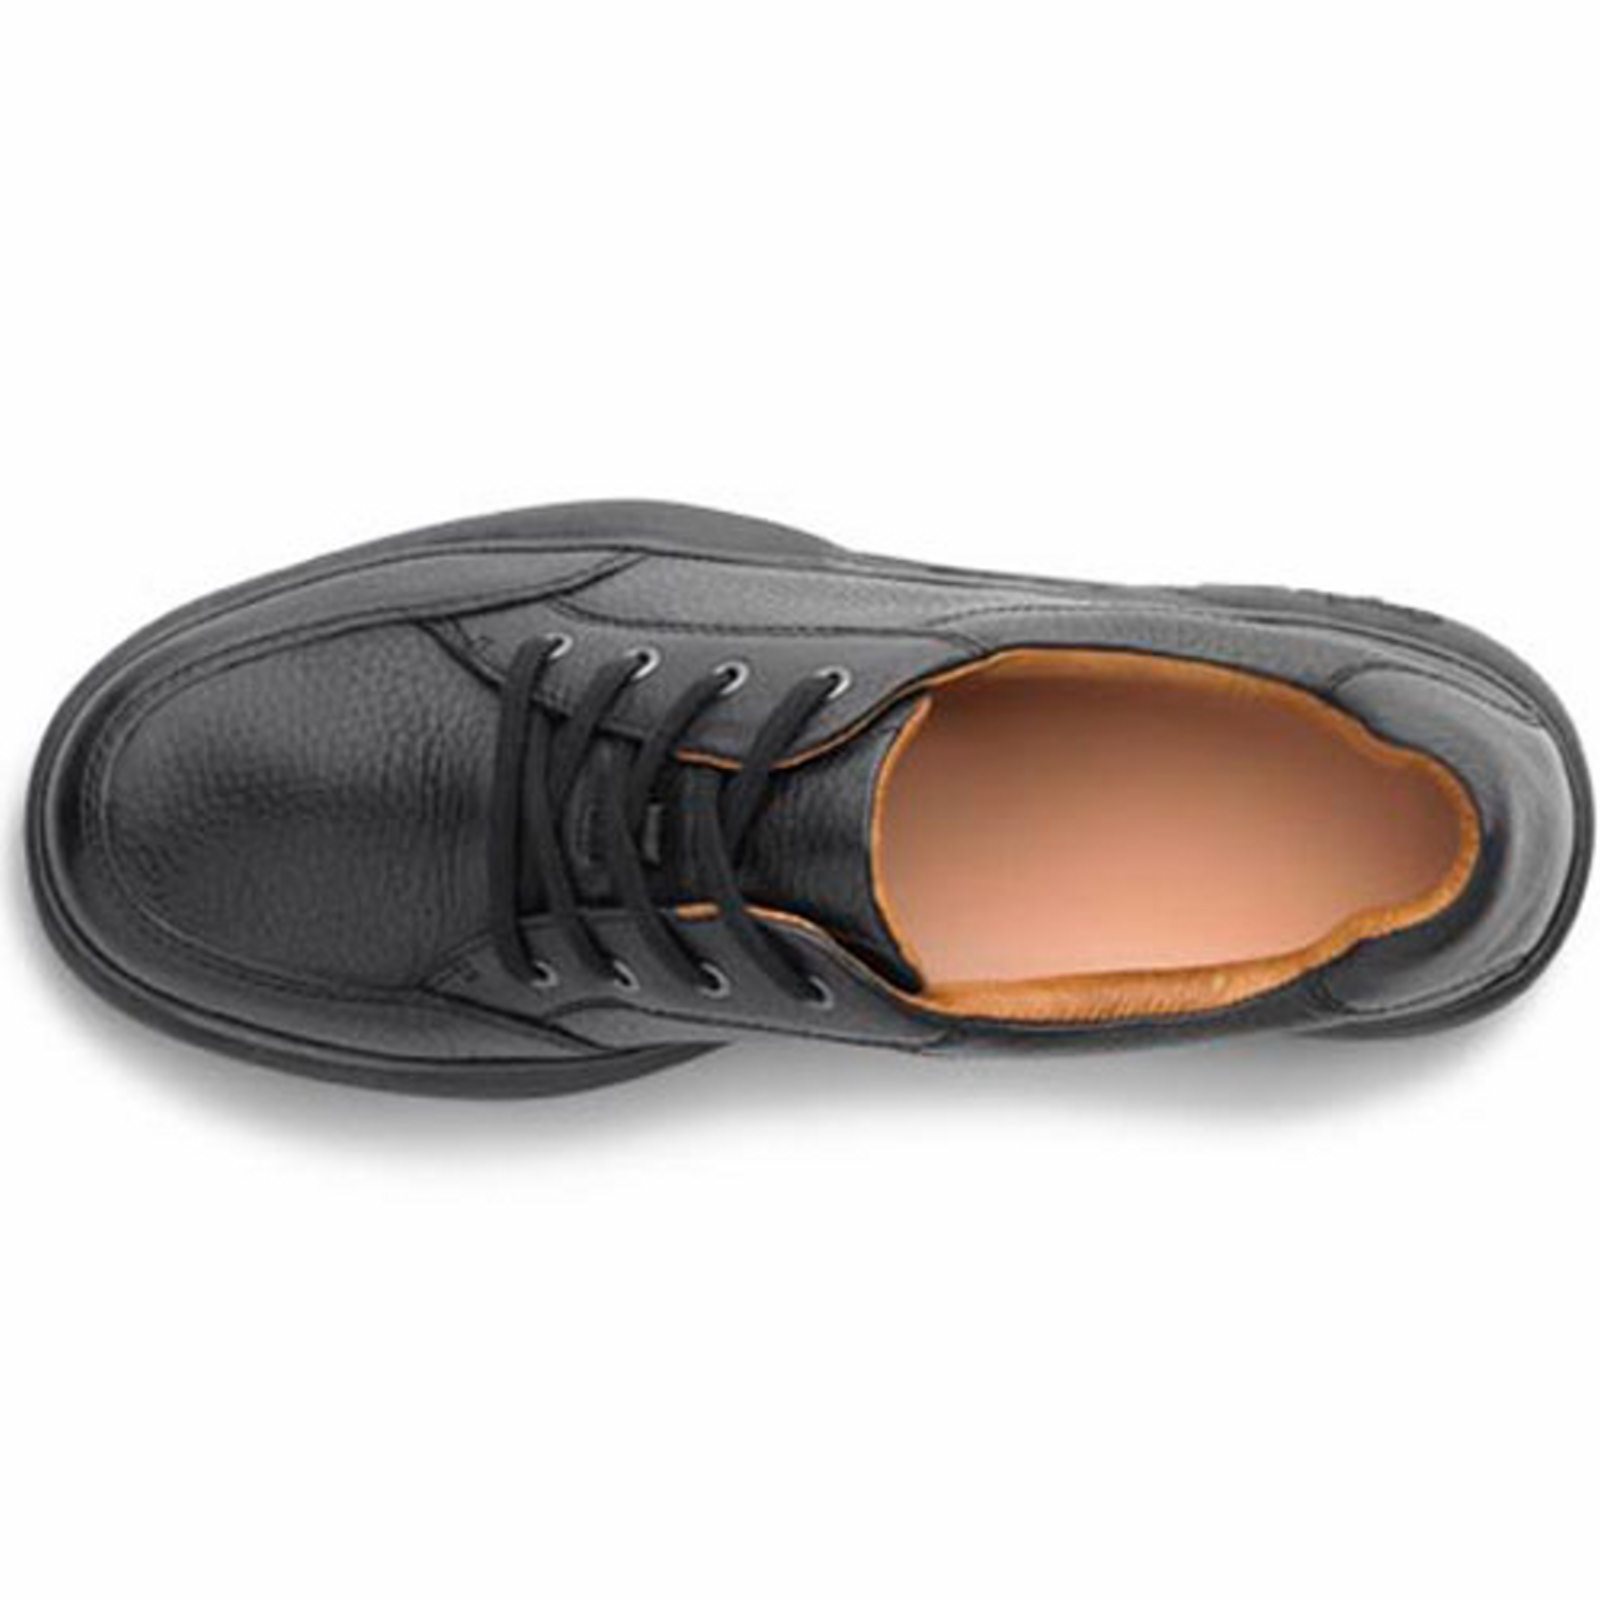 Dr. Comfort Justin Men's Casual Shoe: 11 Medium (B/D) Black Lace - image 5 of 5